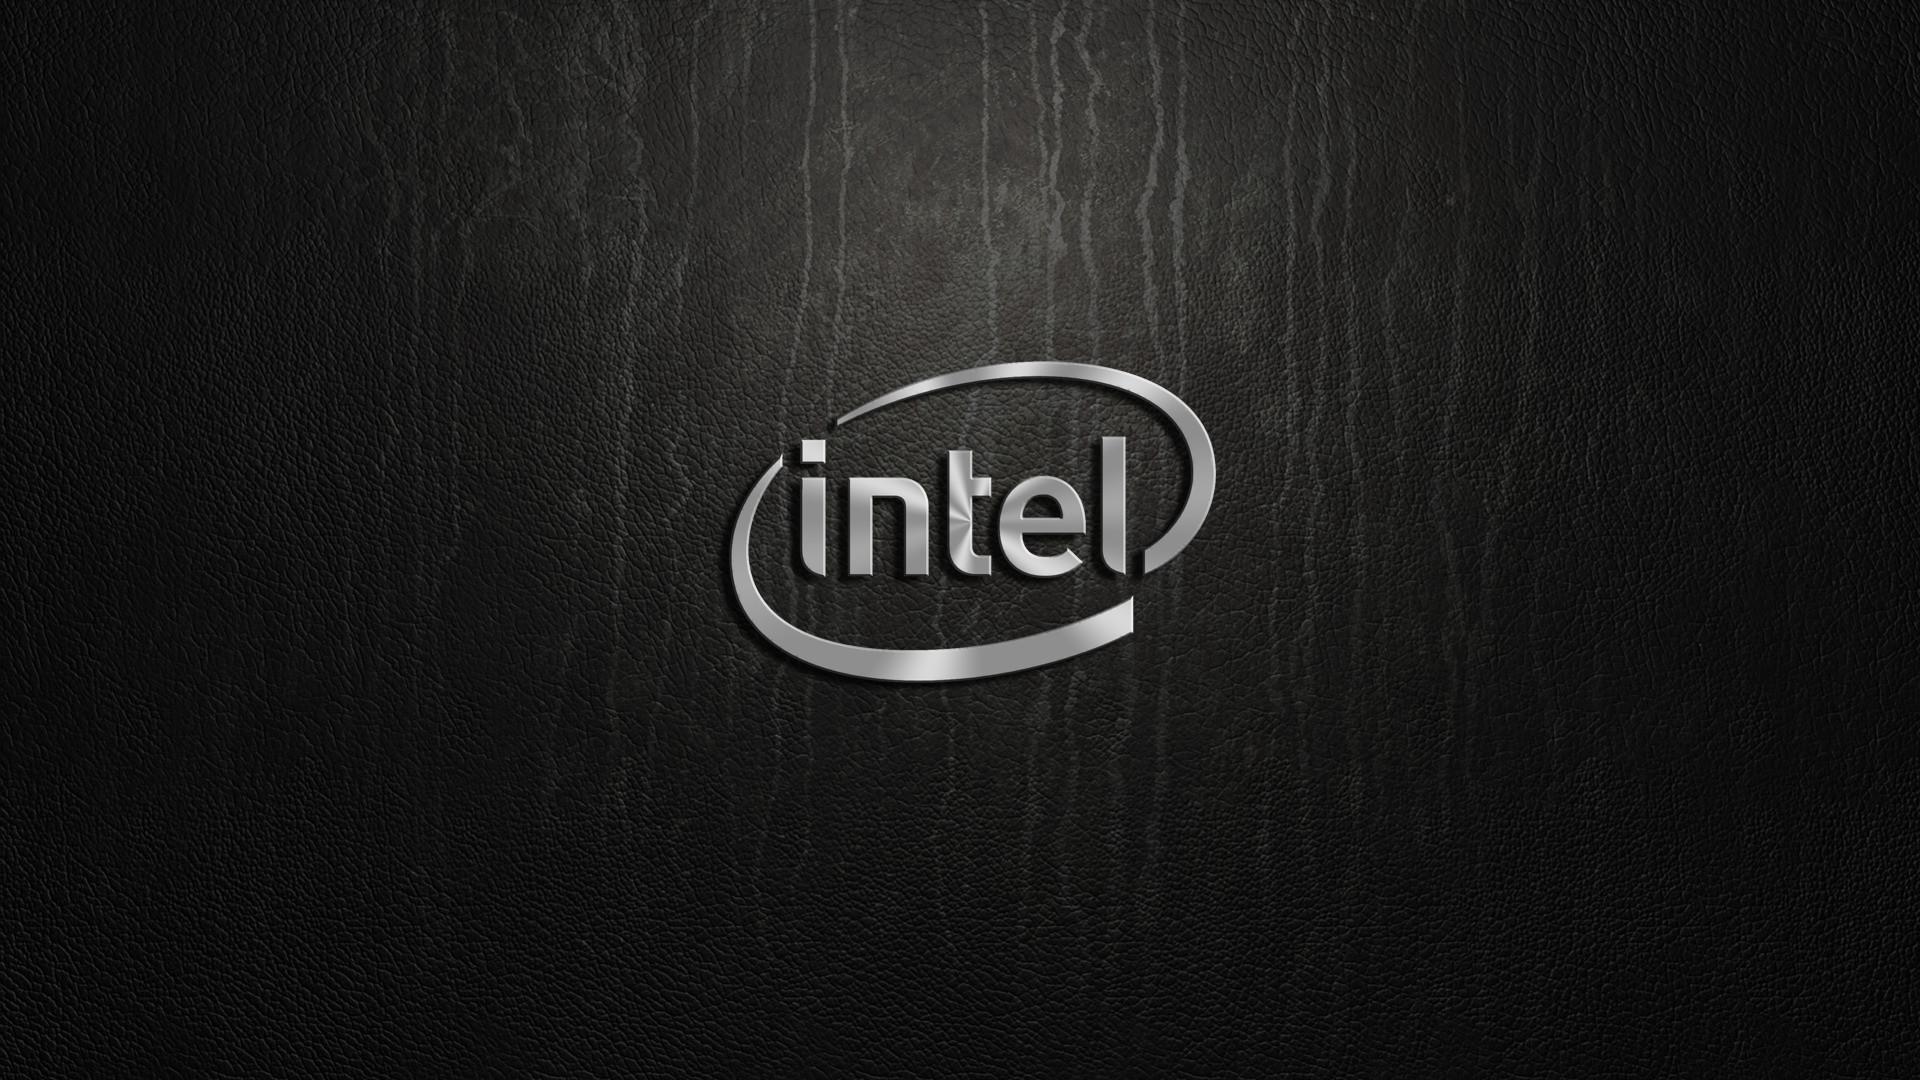 1920x1080 Intel HD Wallpaper | Background Image |  | ID:588110 - Wallpaper  Abyss